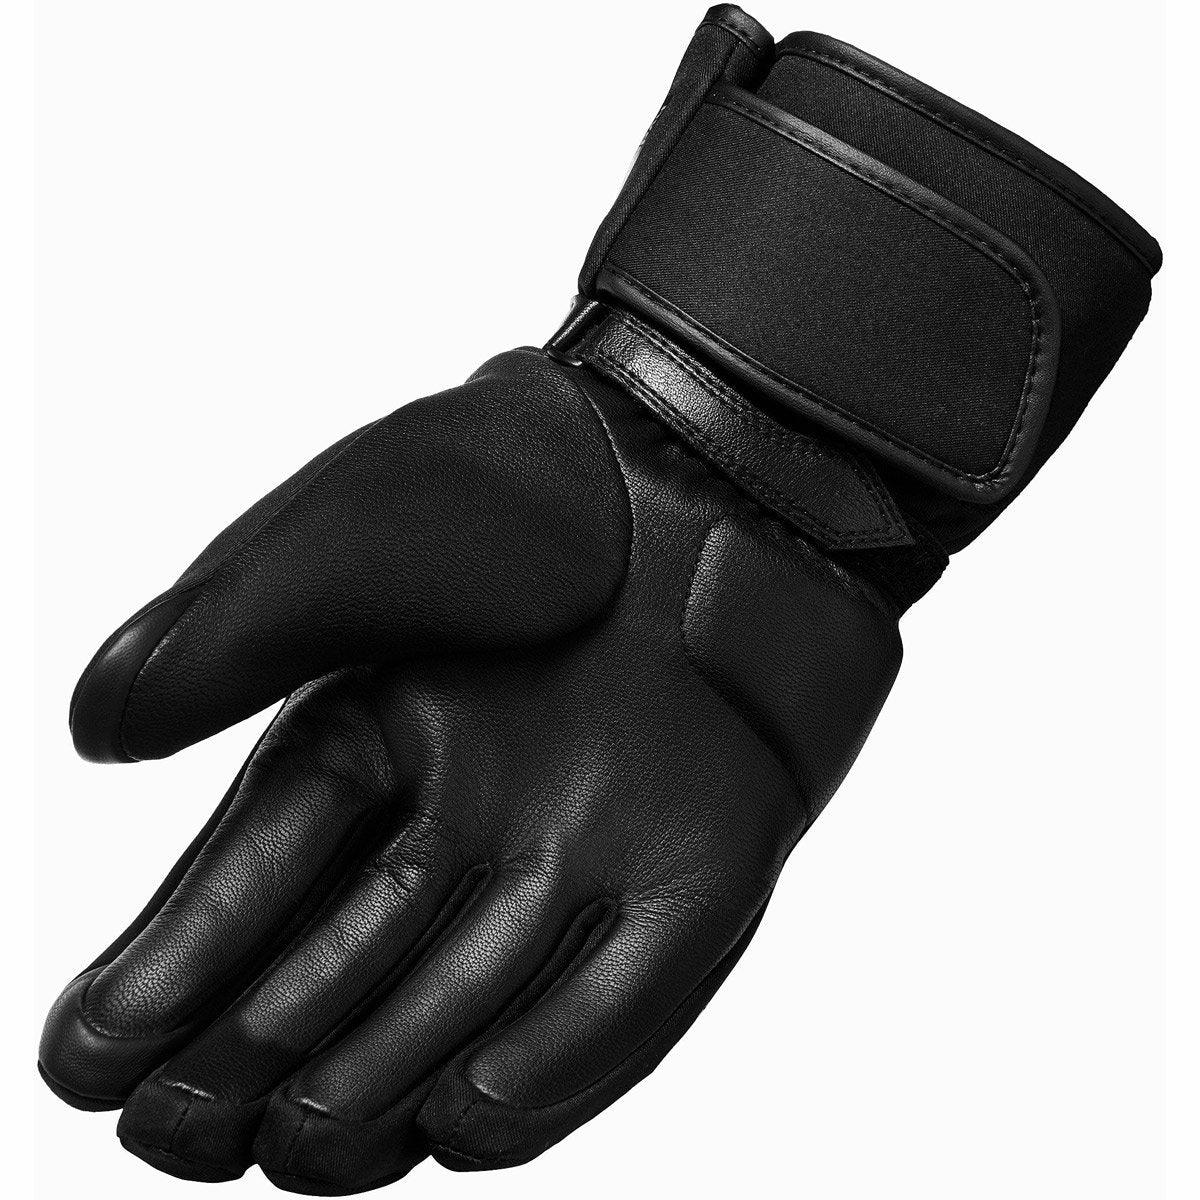 Rev It Foster Gloves WP Black - Winter Motorcycle Gloves